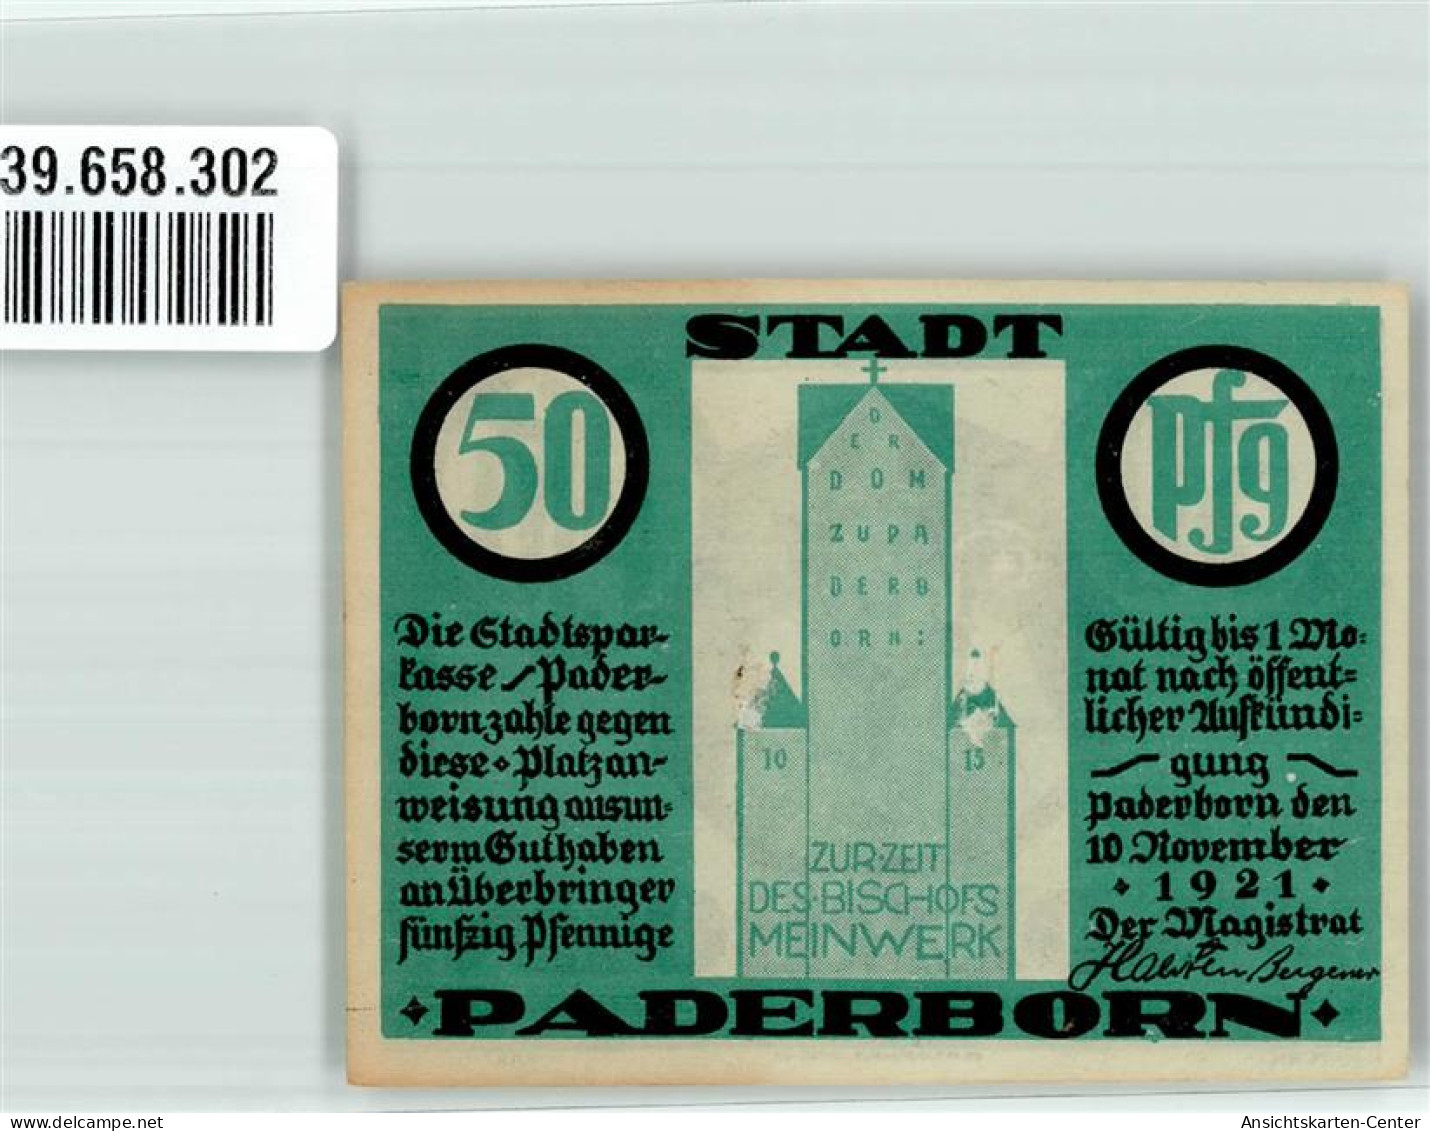 39658302 - Paderborn - Paderborn